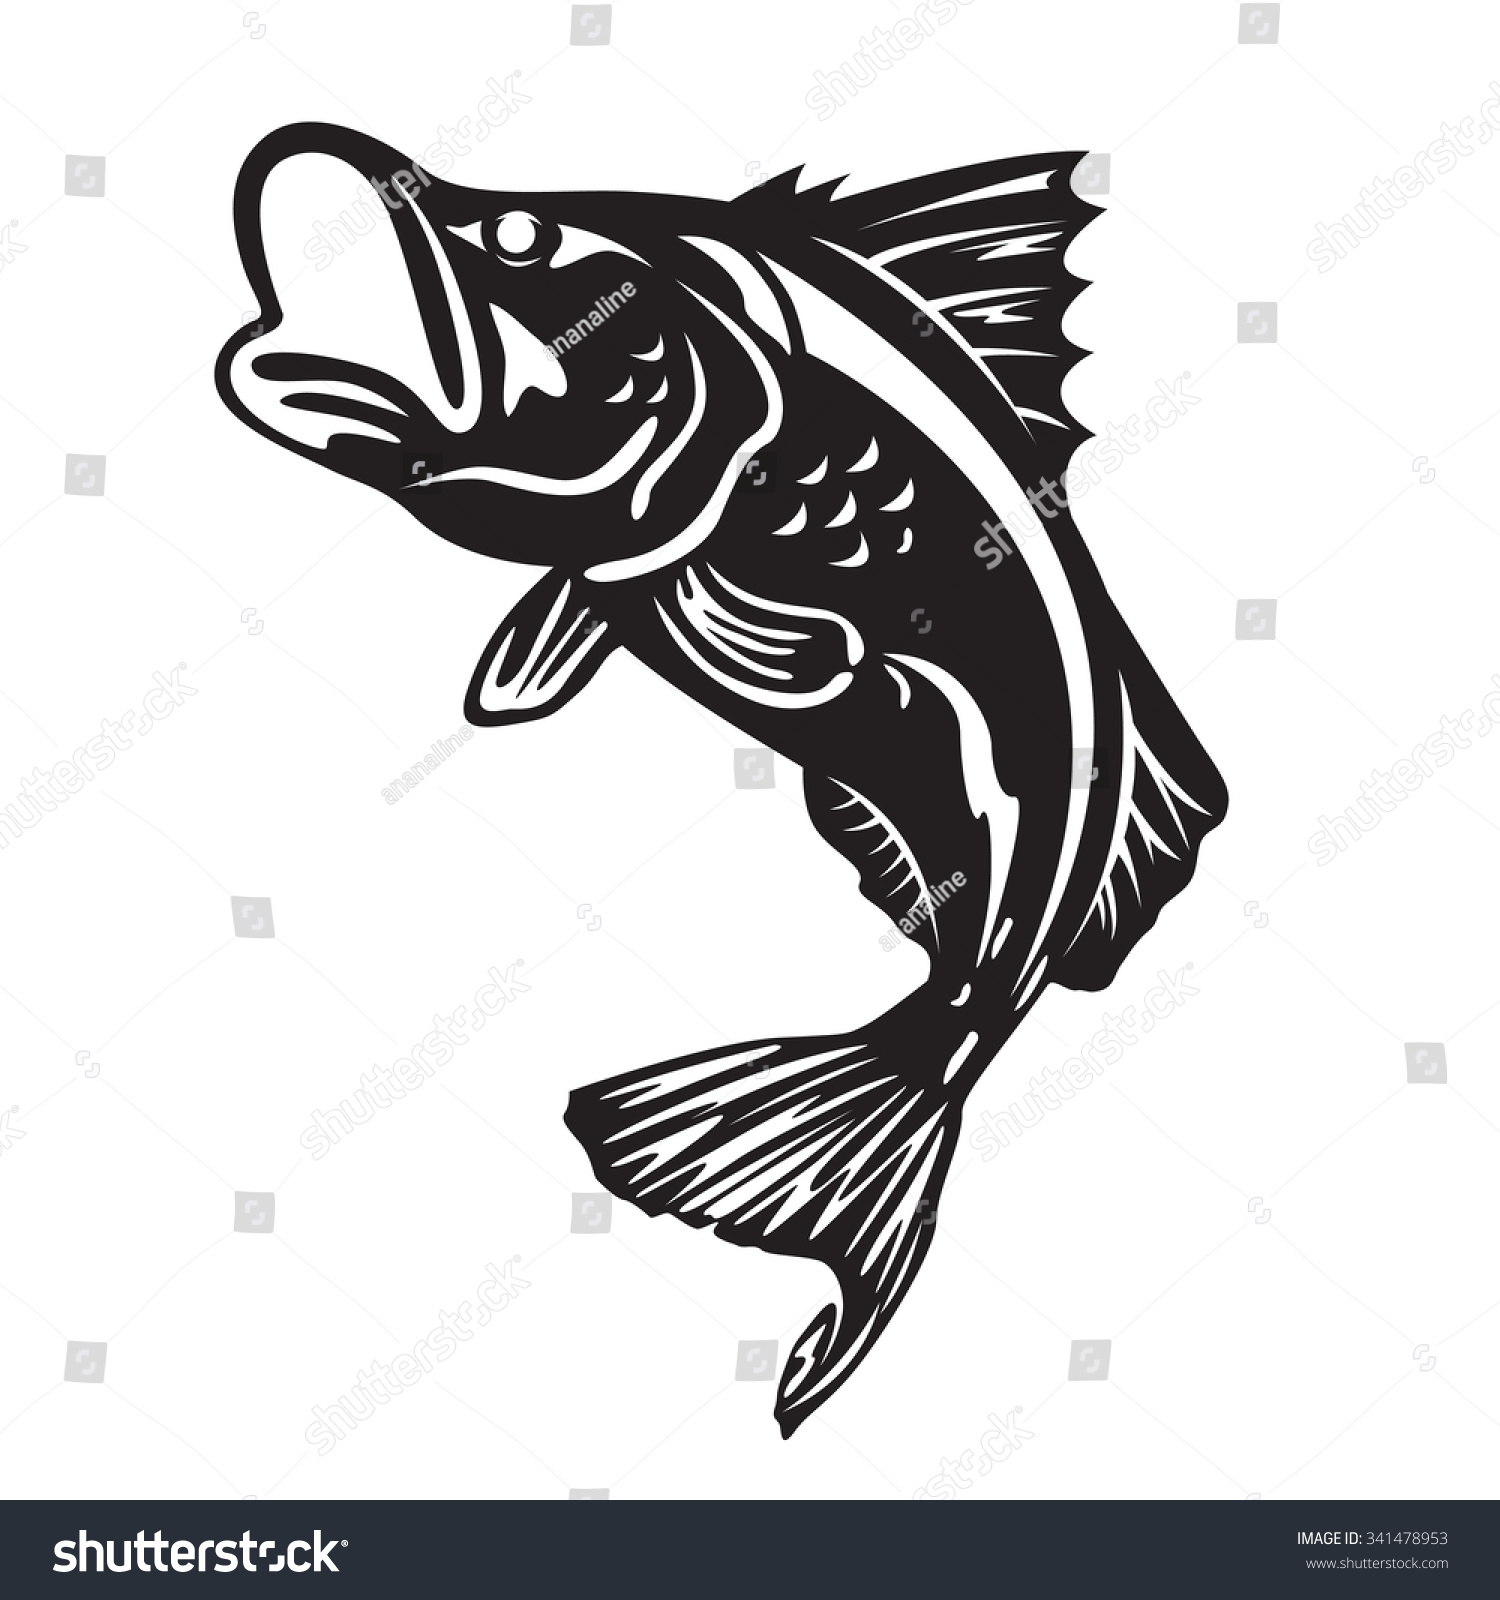 Royalty Free The Barramundi Fish Jump Vector Art 341478953 Stock